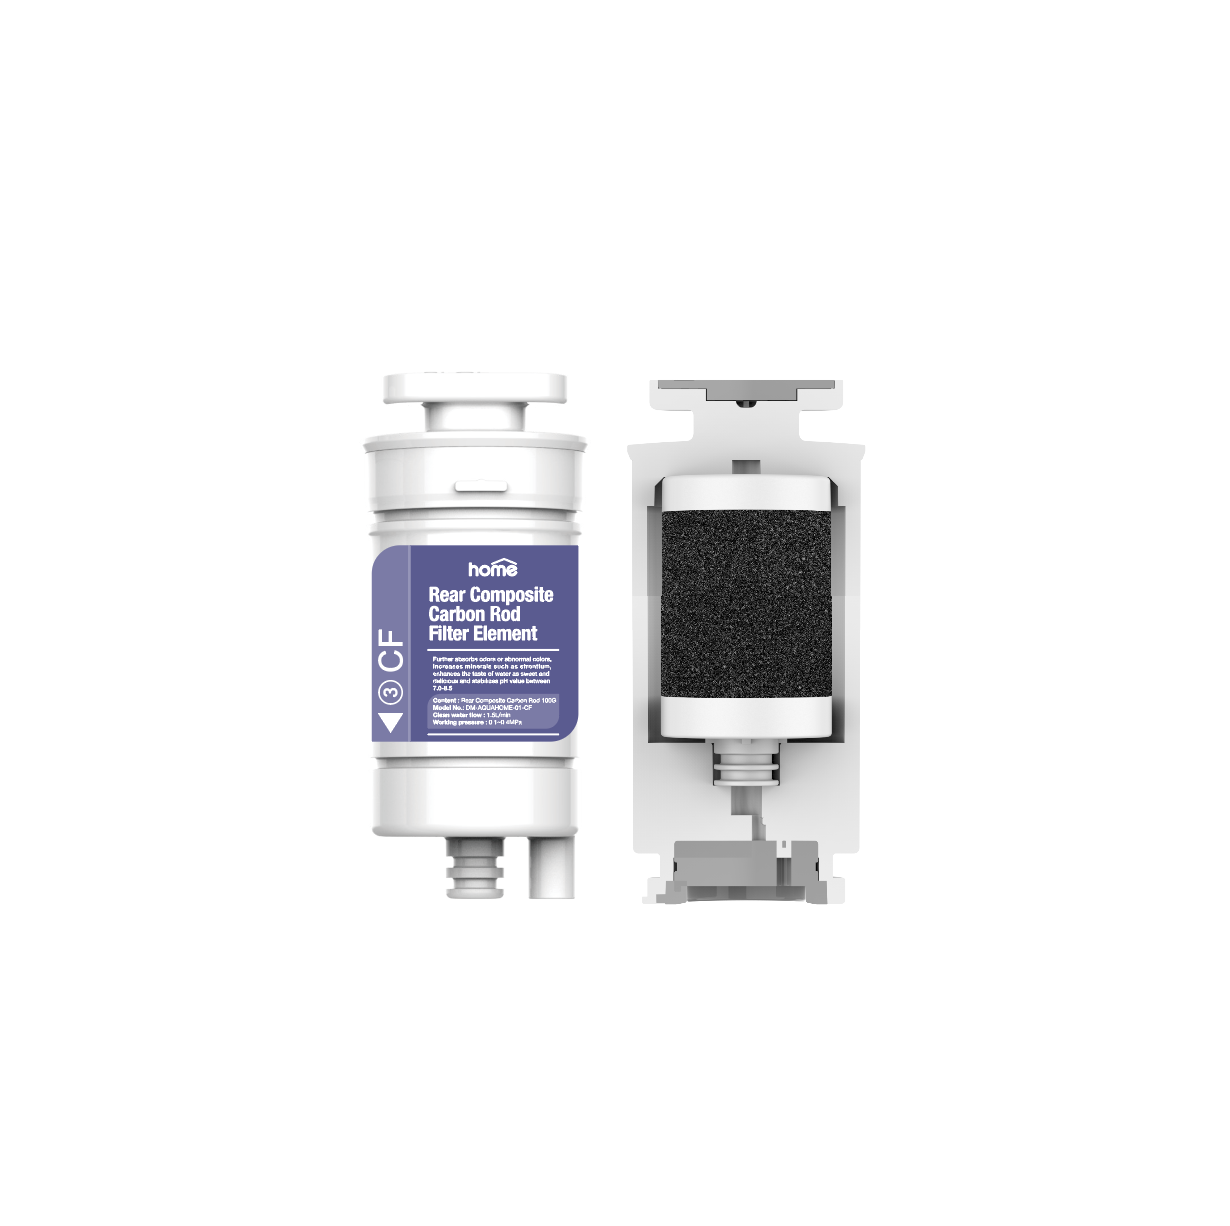 Aquahome CF Filter (For Aquahome Water Dispenser)